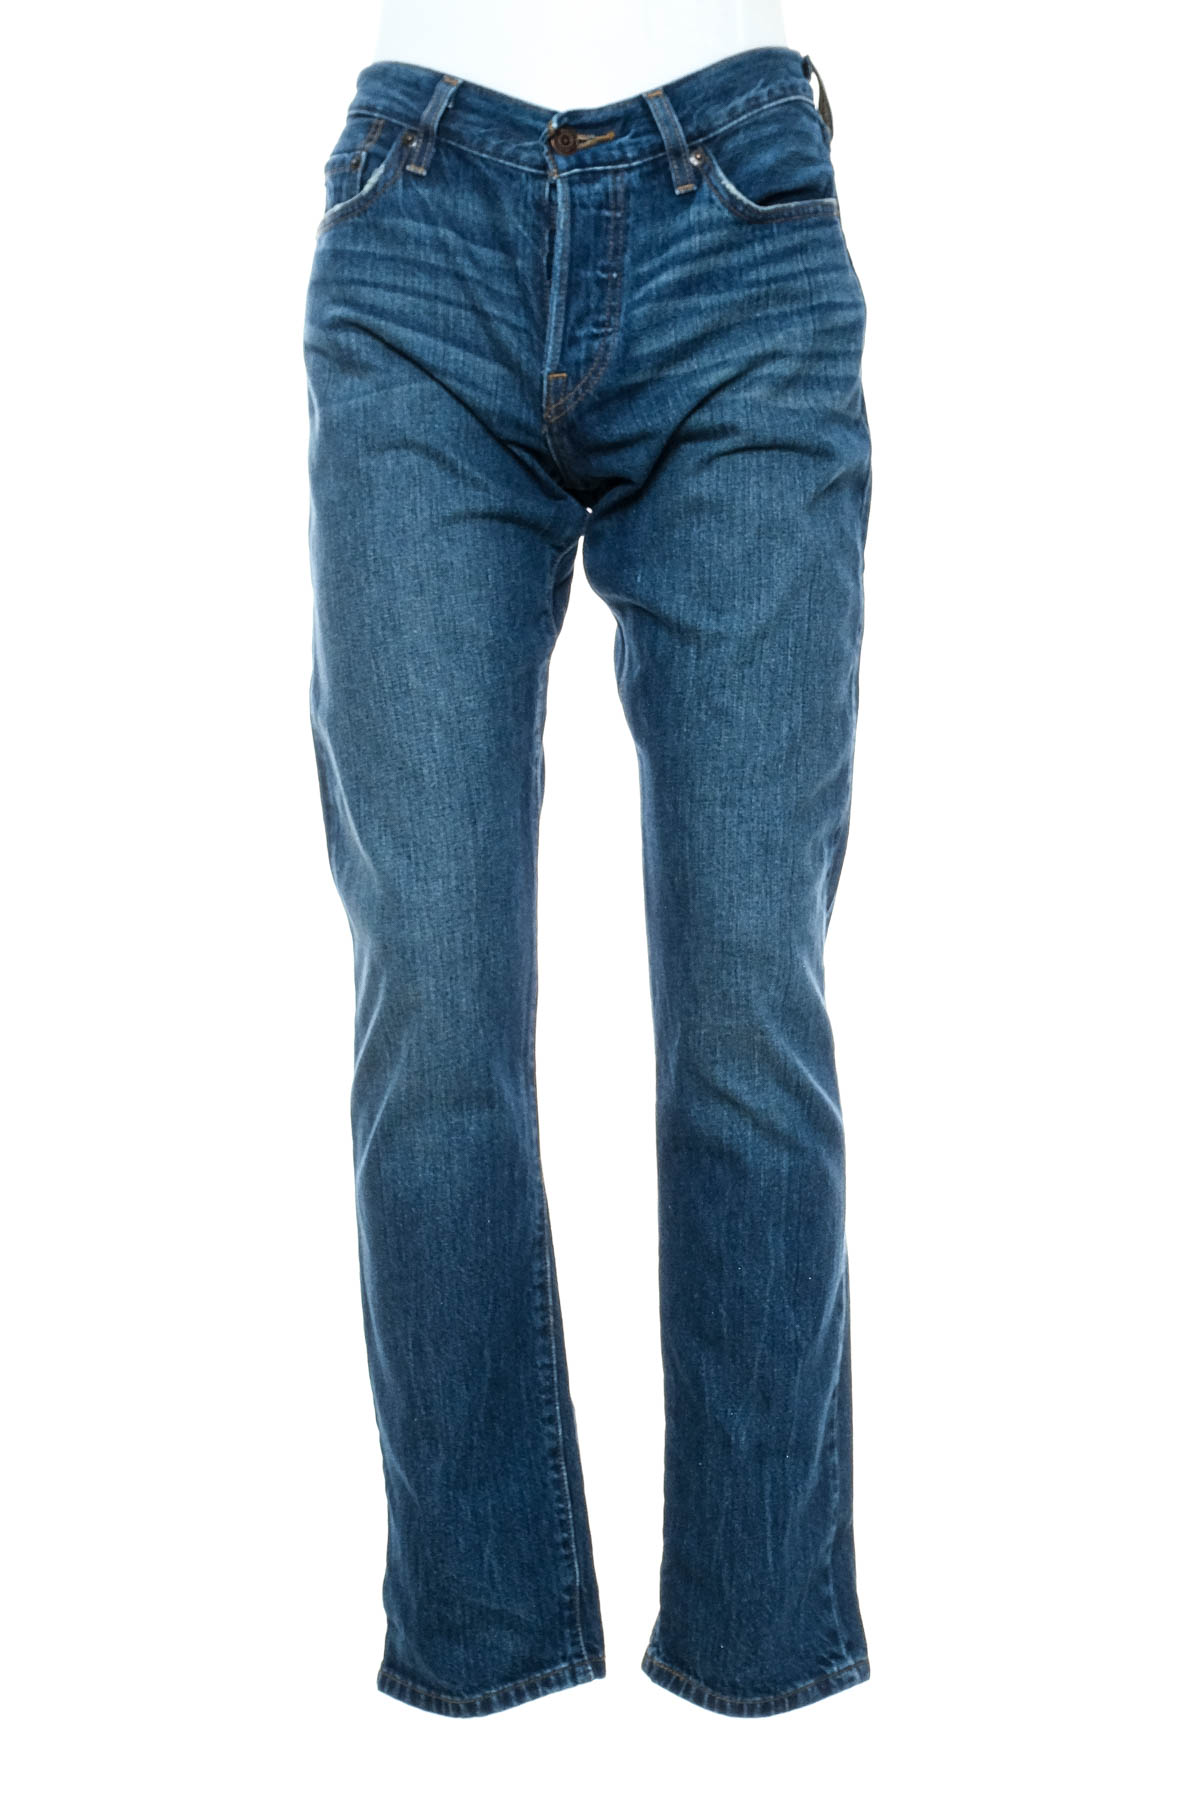 Men's jeans - Levi Strauss & Co. - 0